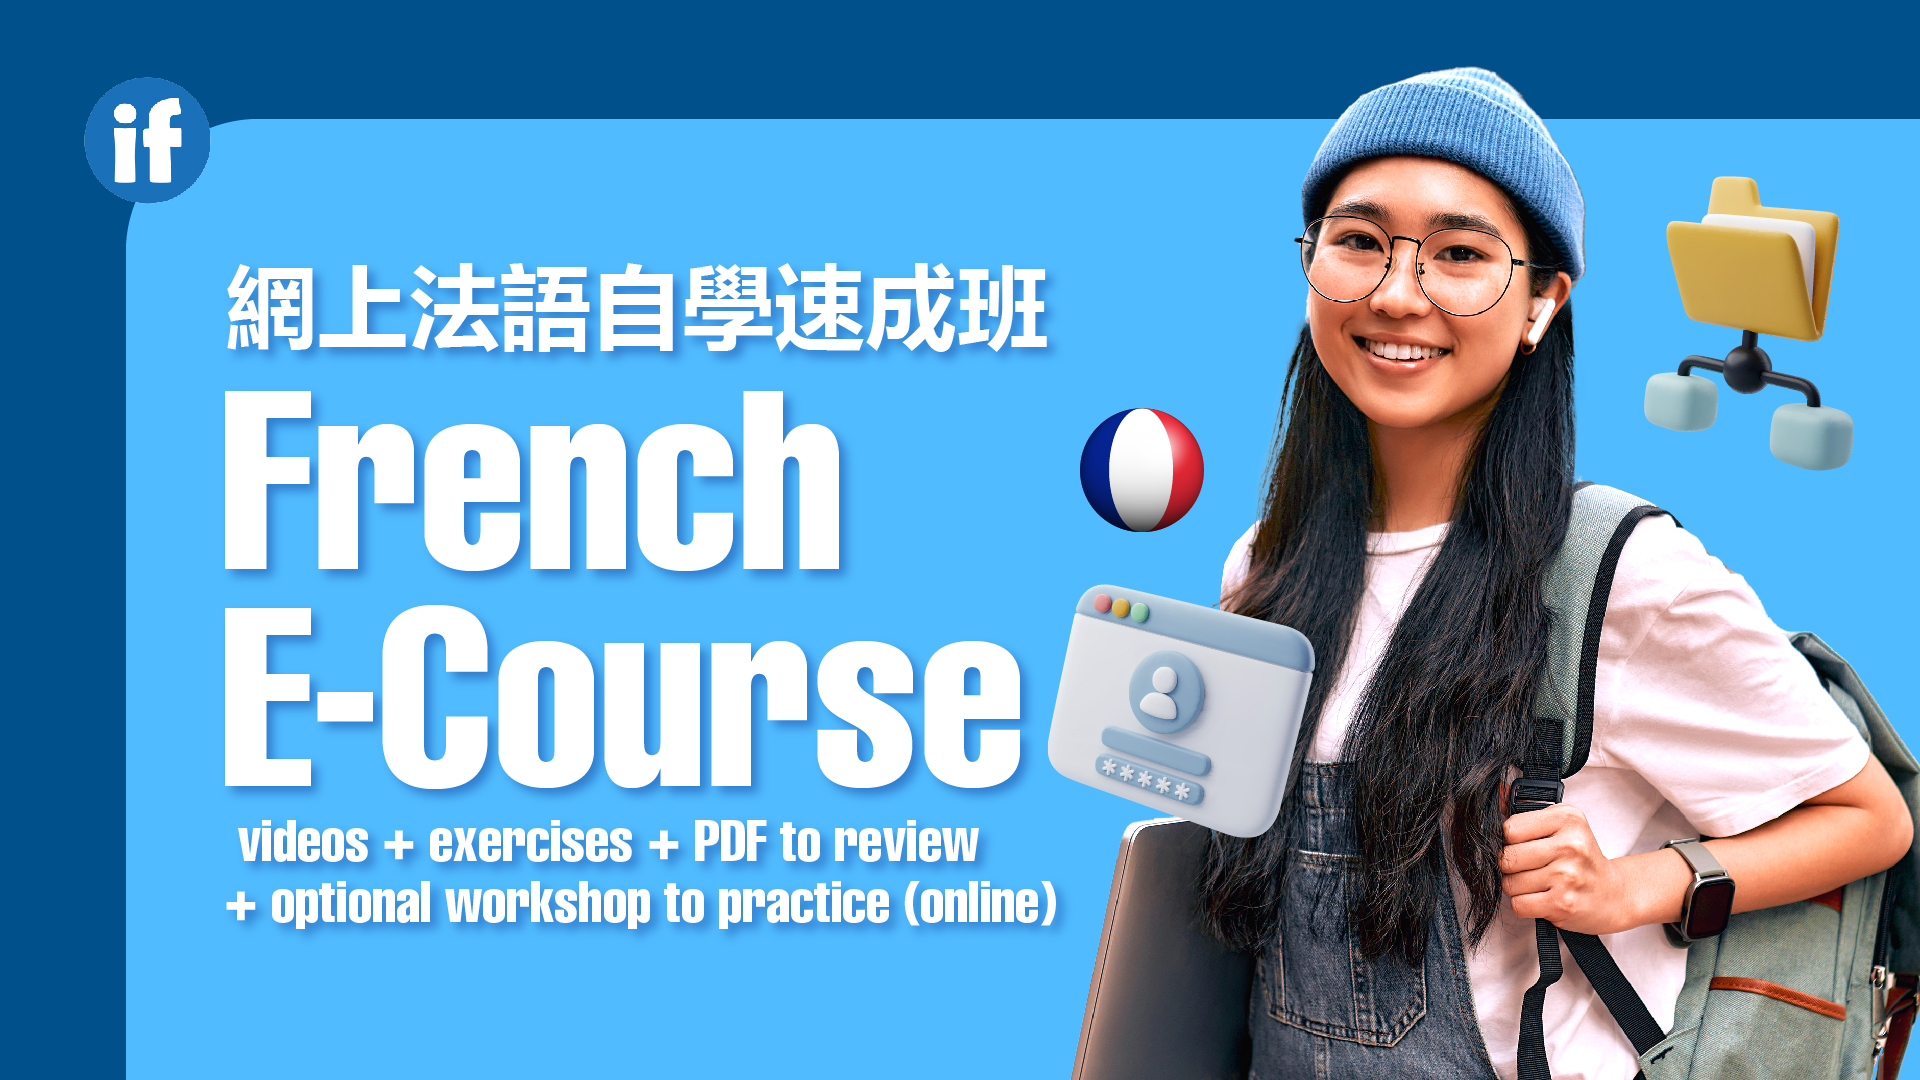 Self-study French